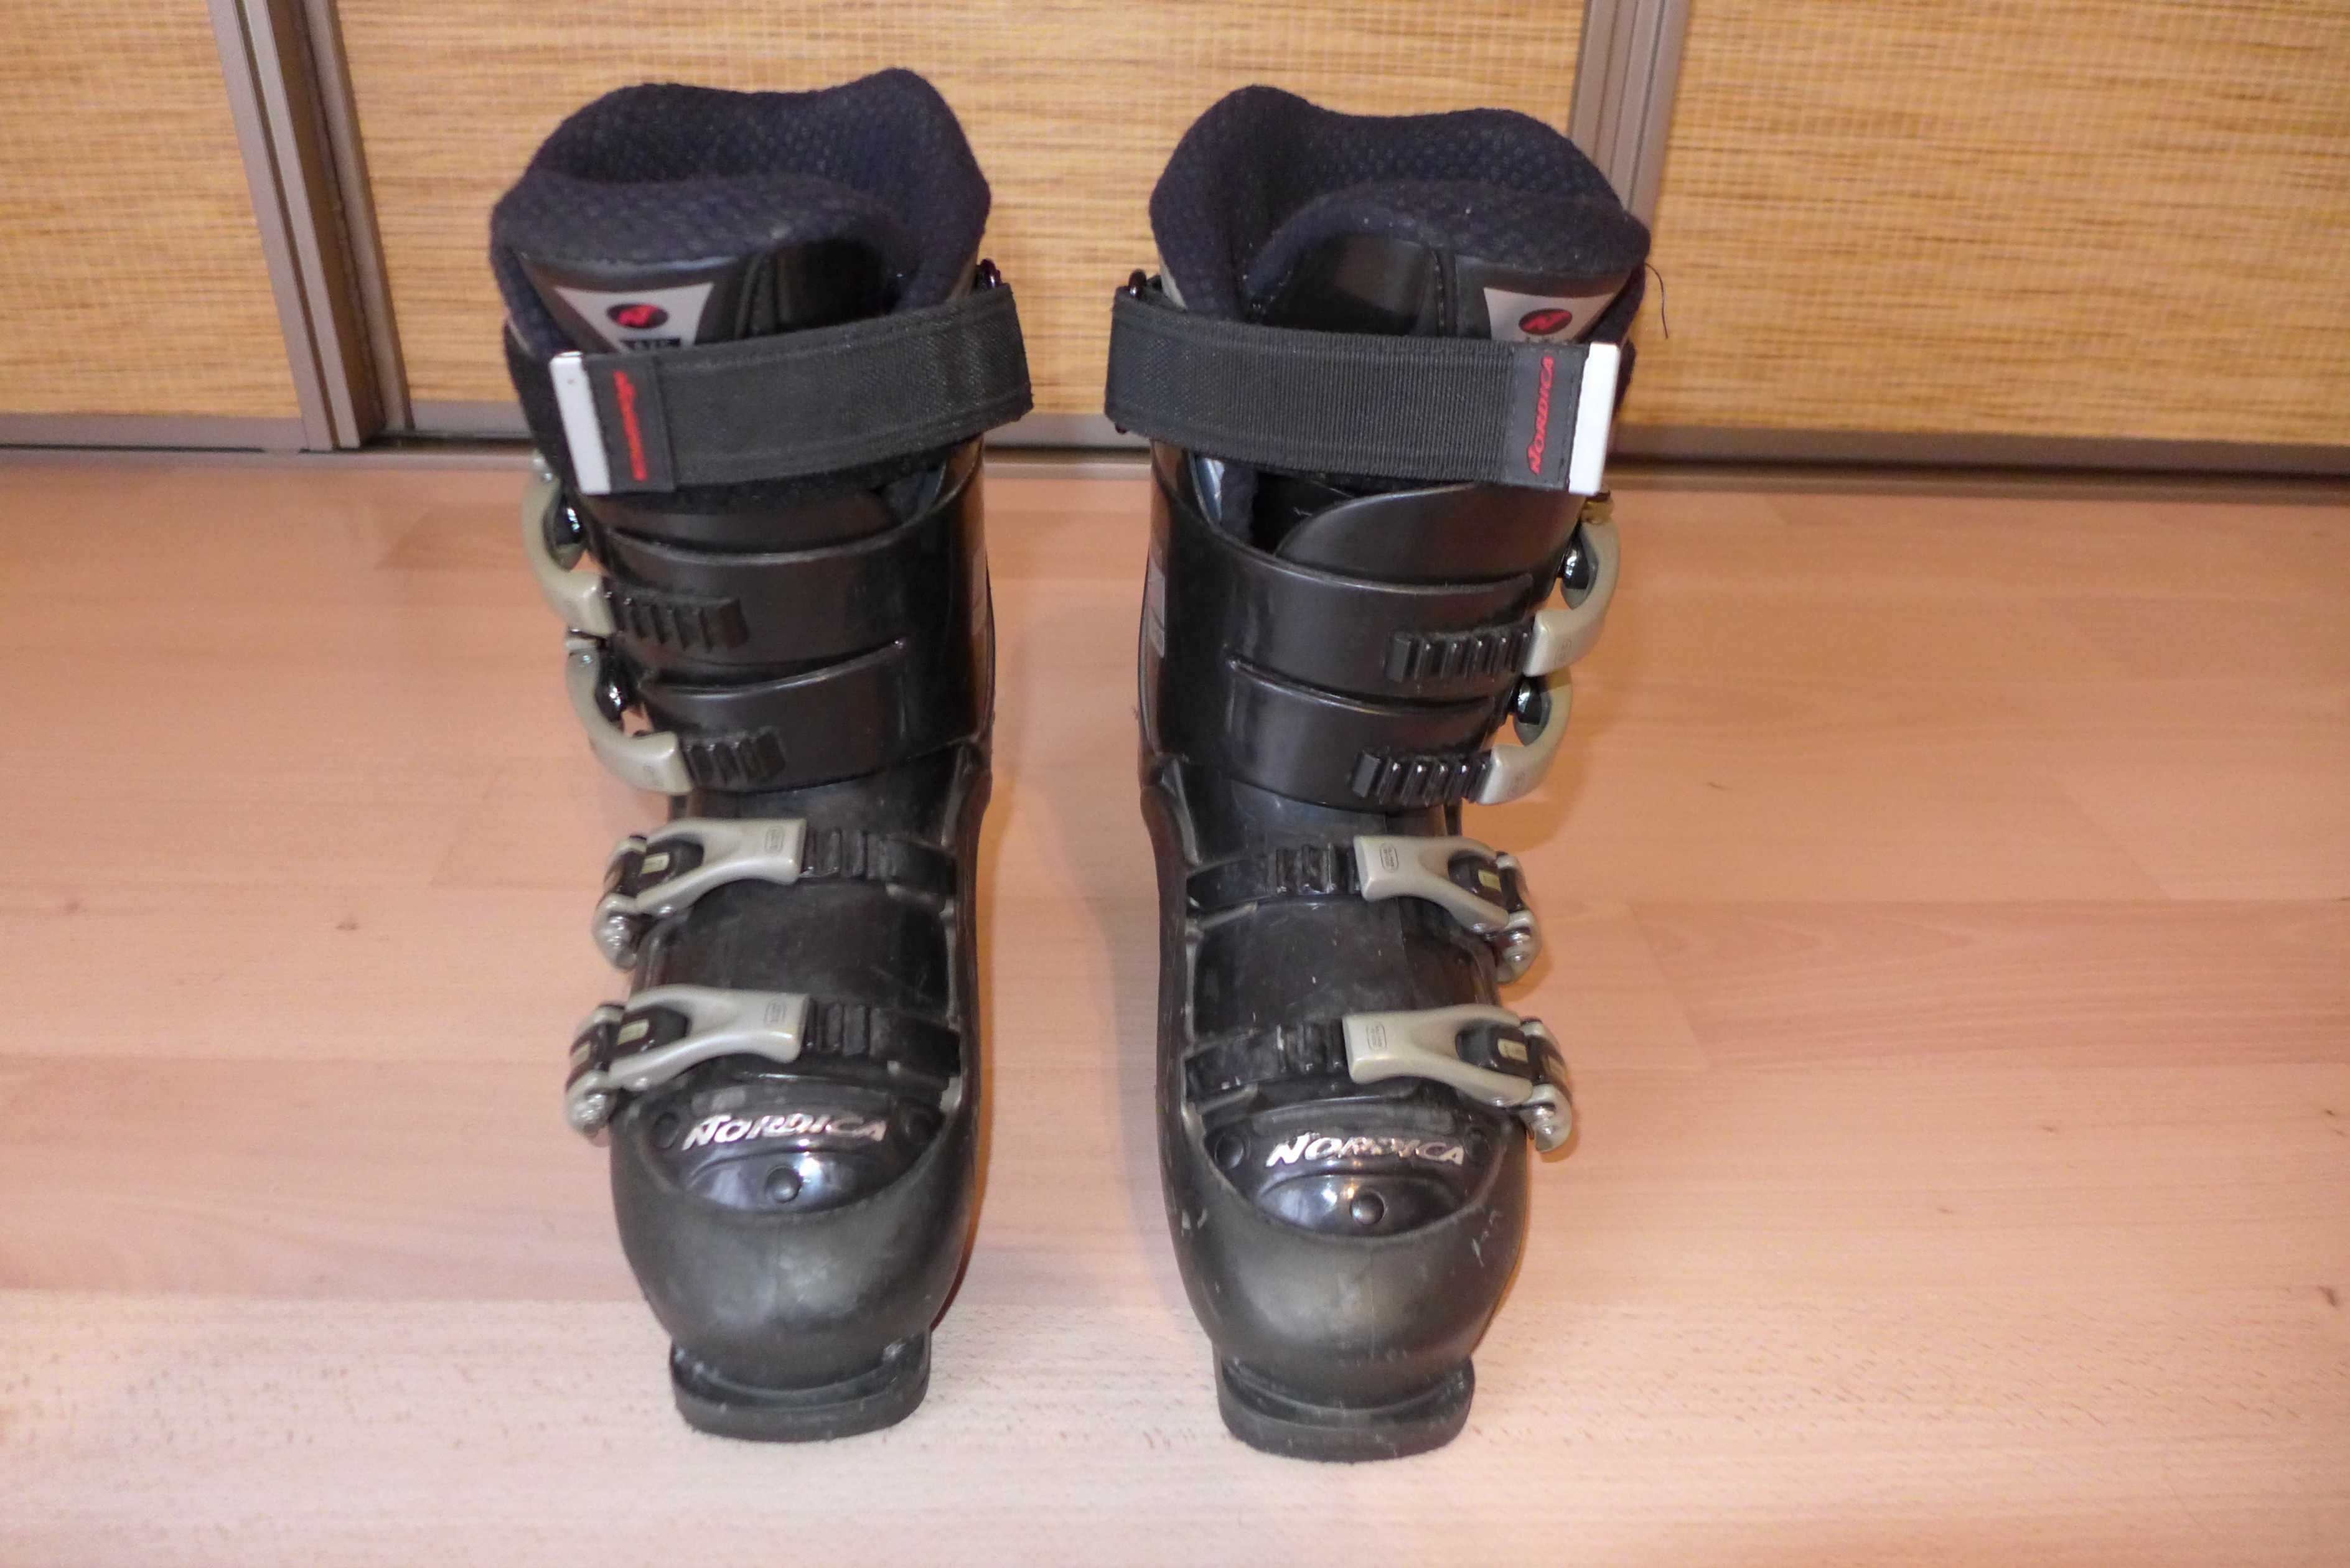 Buty narciarskie Nordica N 5.1.W rozmiar 25-25,5 skorupa 290 mm.